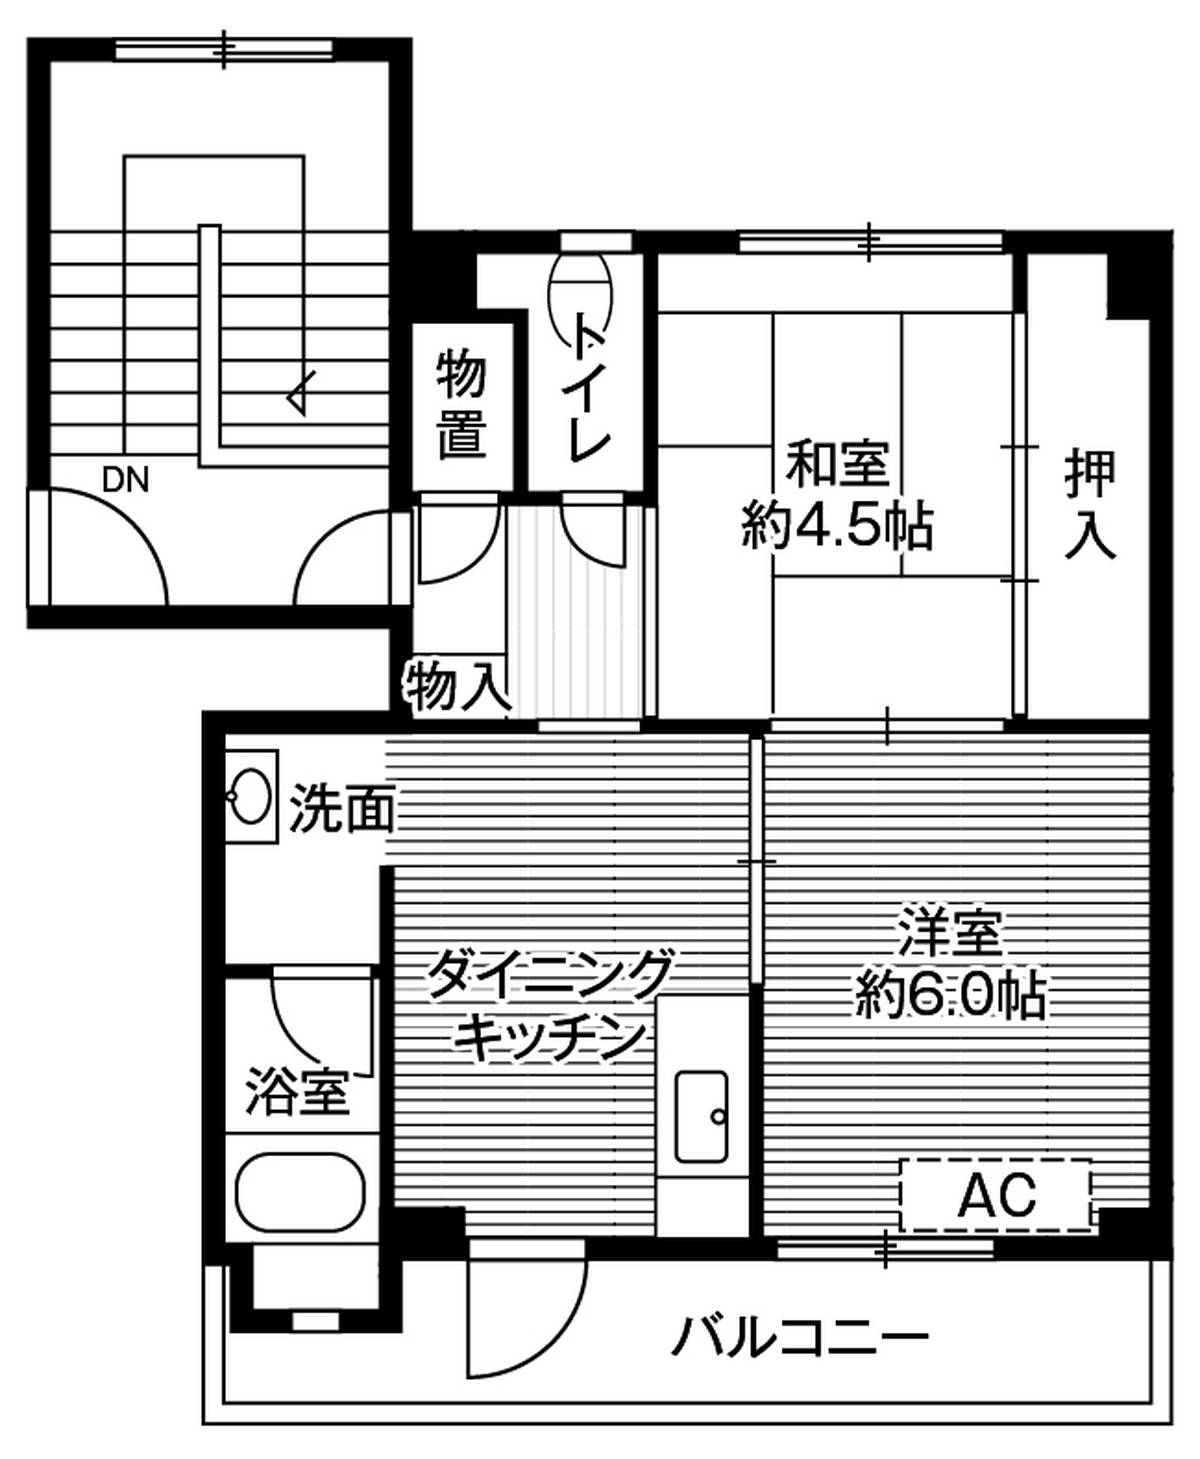 2DK floorplan of Village House Nakaniida in Kami-gun